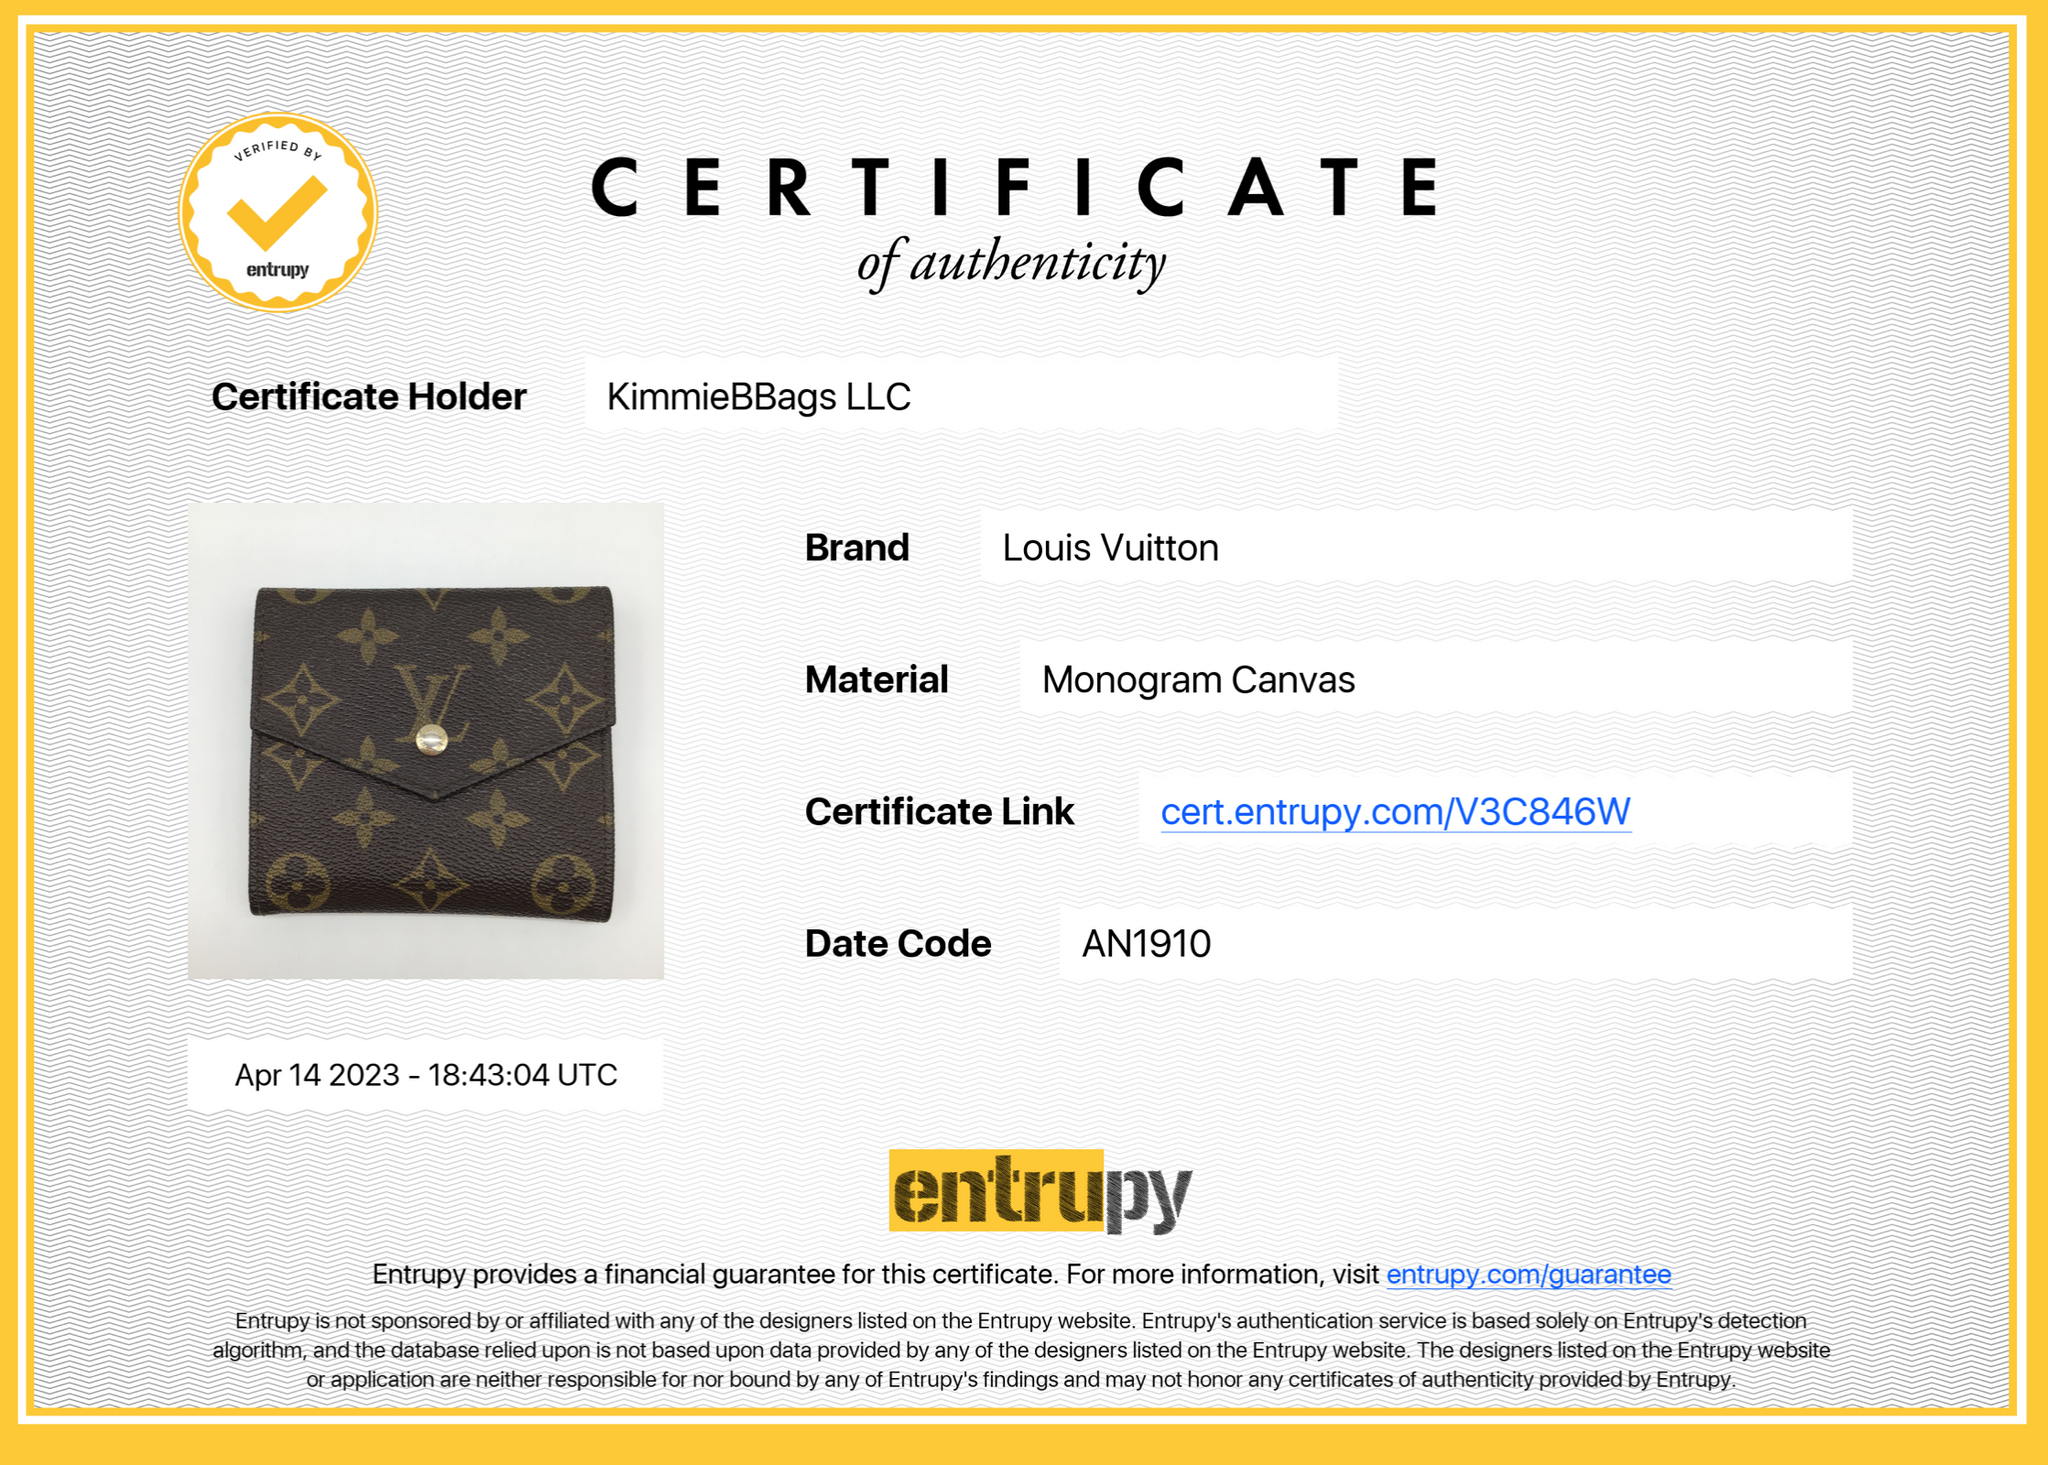 Elise Wallet, Used & Preloved Louis Vuitton Wallets, LXR USA, Black